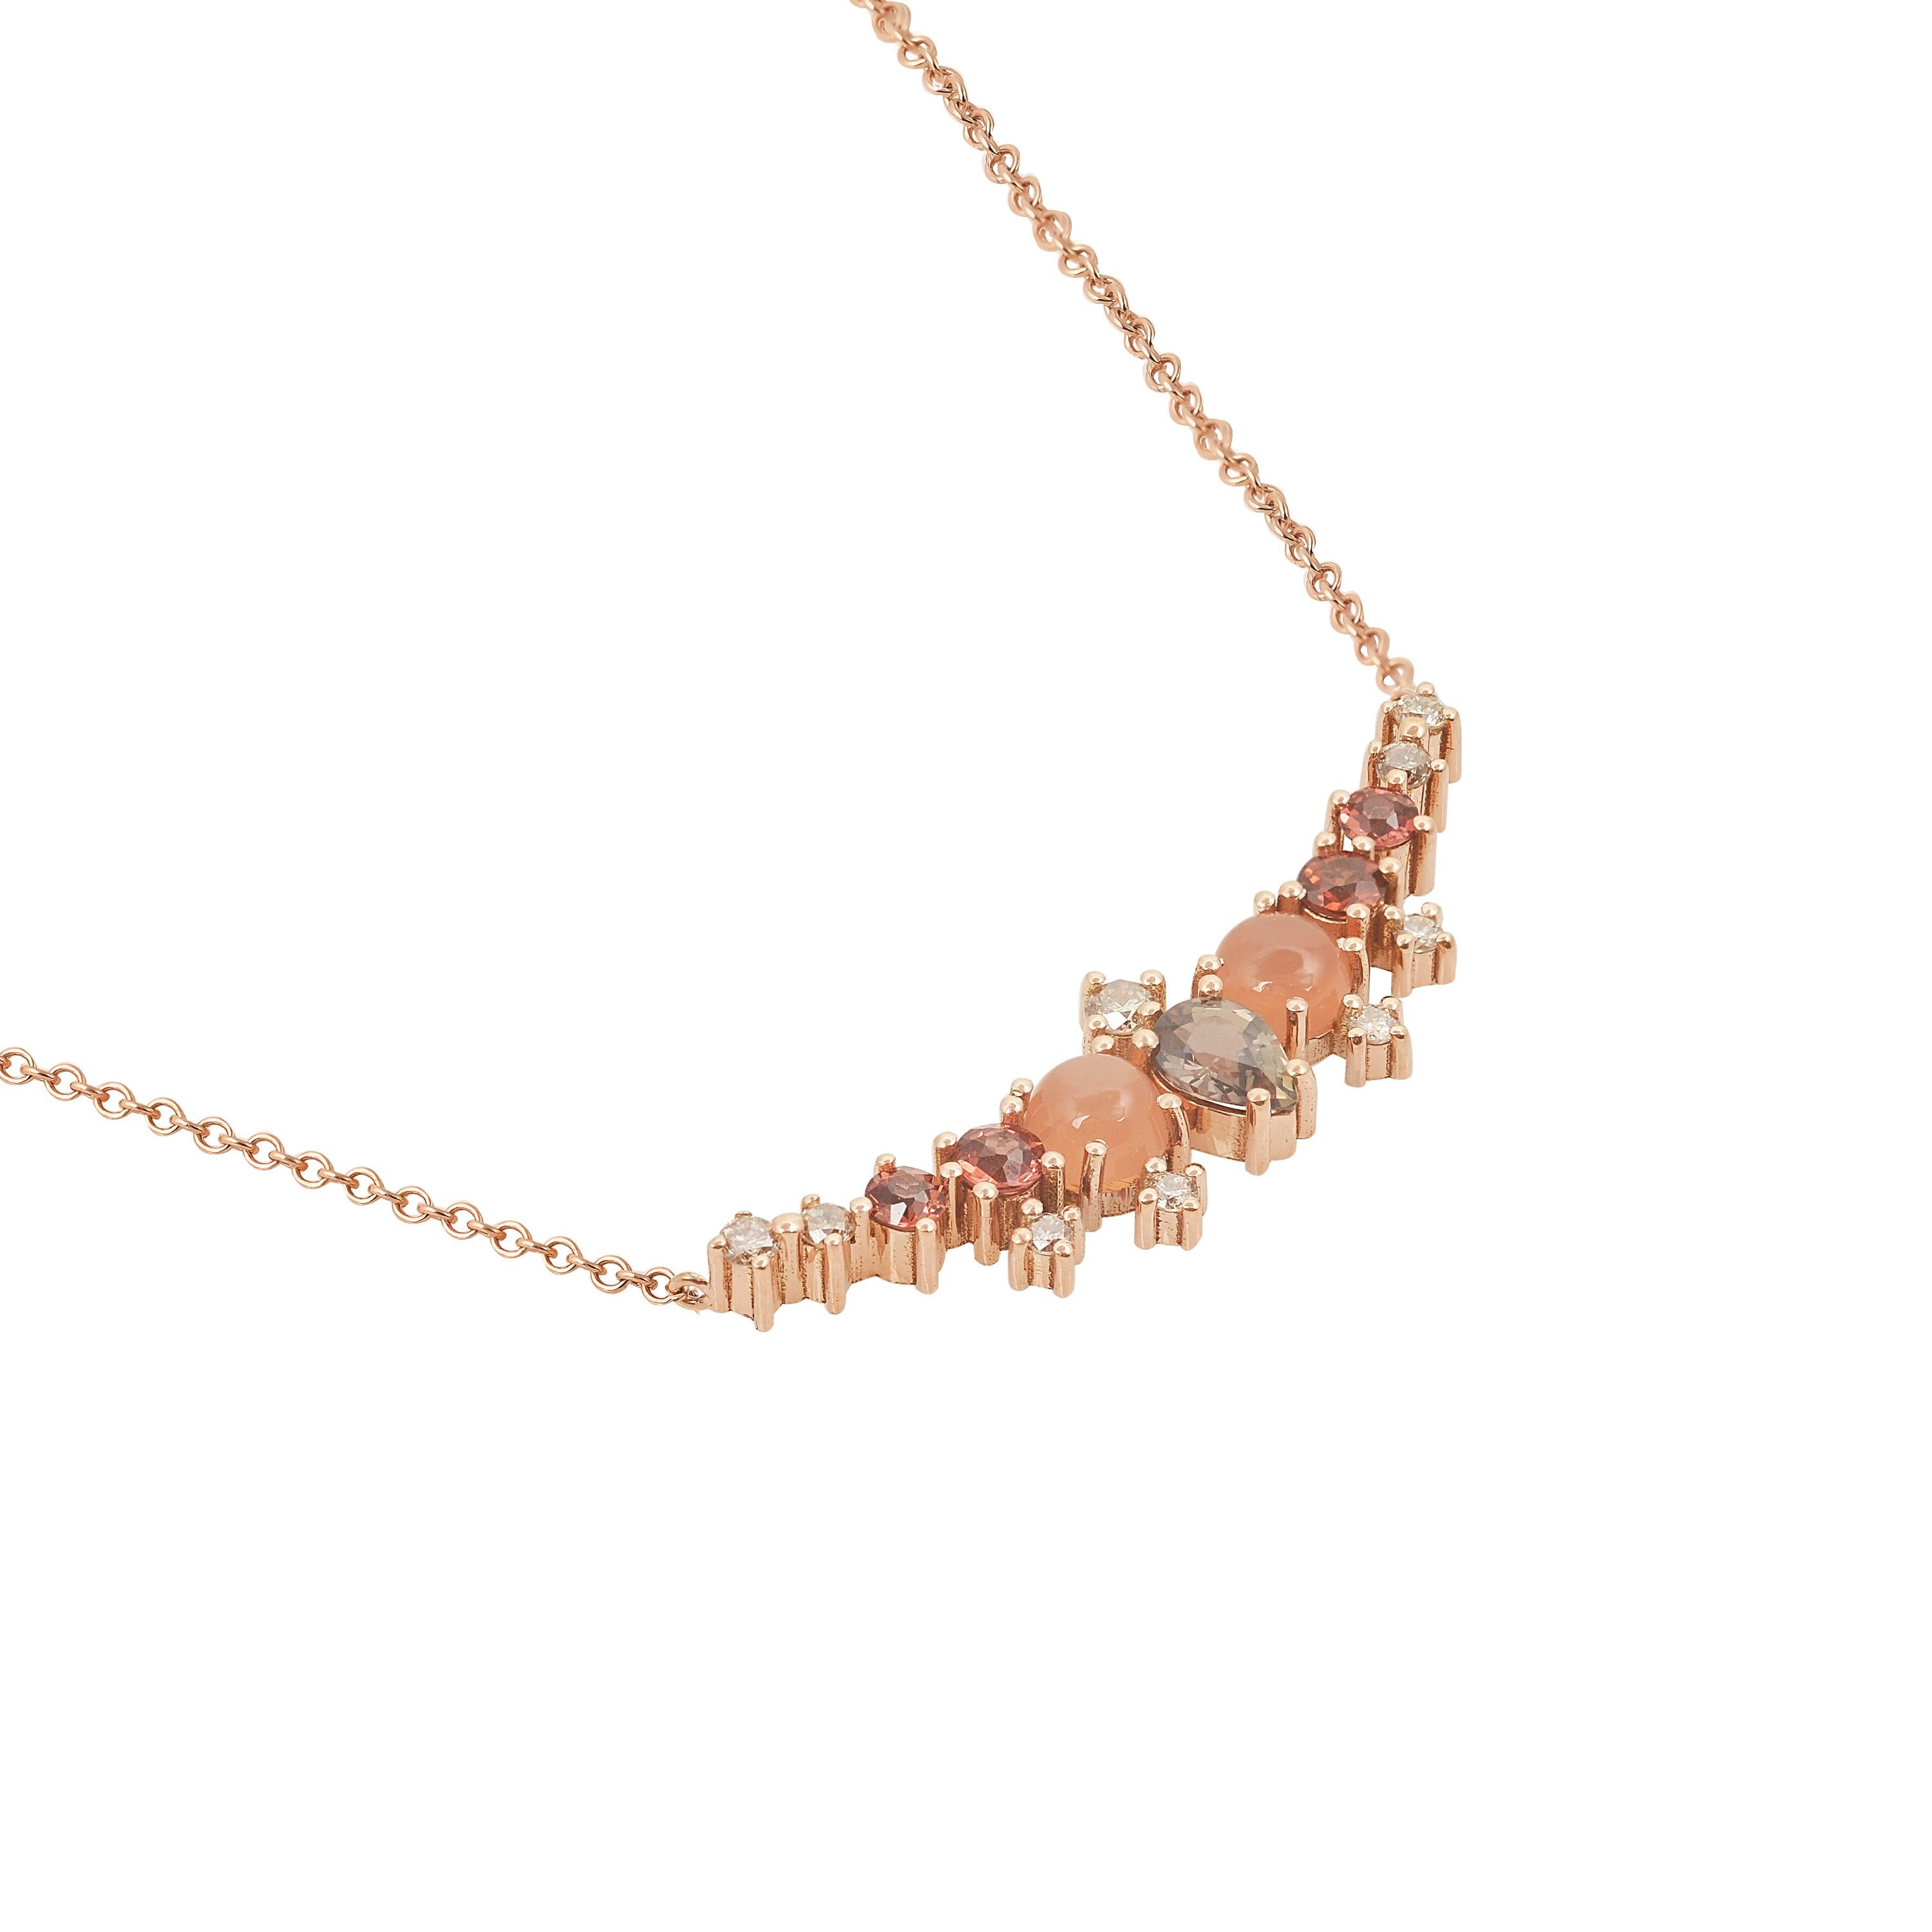 Contemporary Colorful Multi-Stone 18 Karat Gold Necklace with CC Sapphire, Moonstone, Diamond